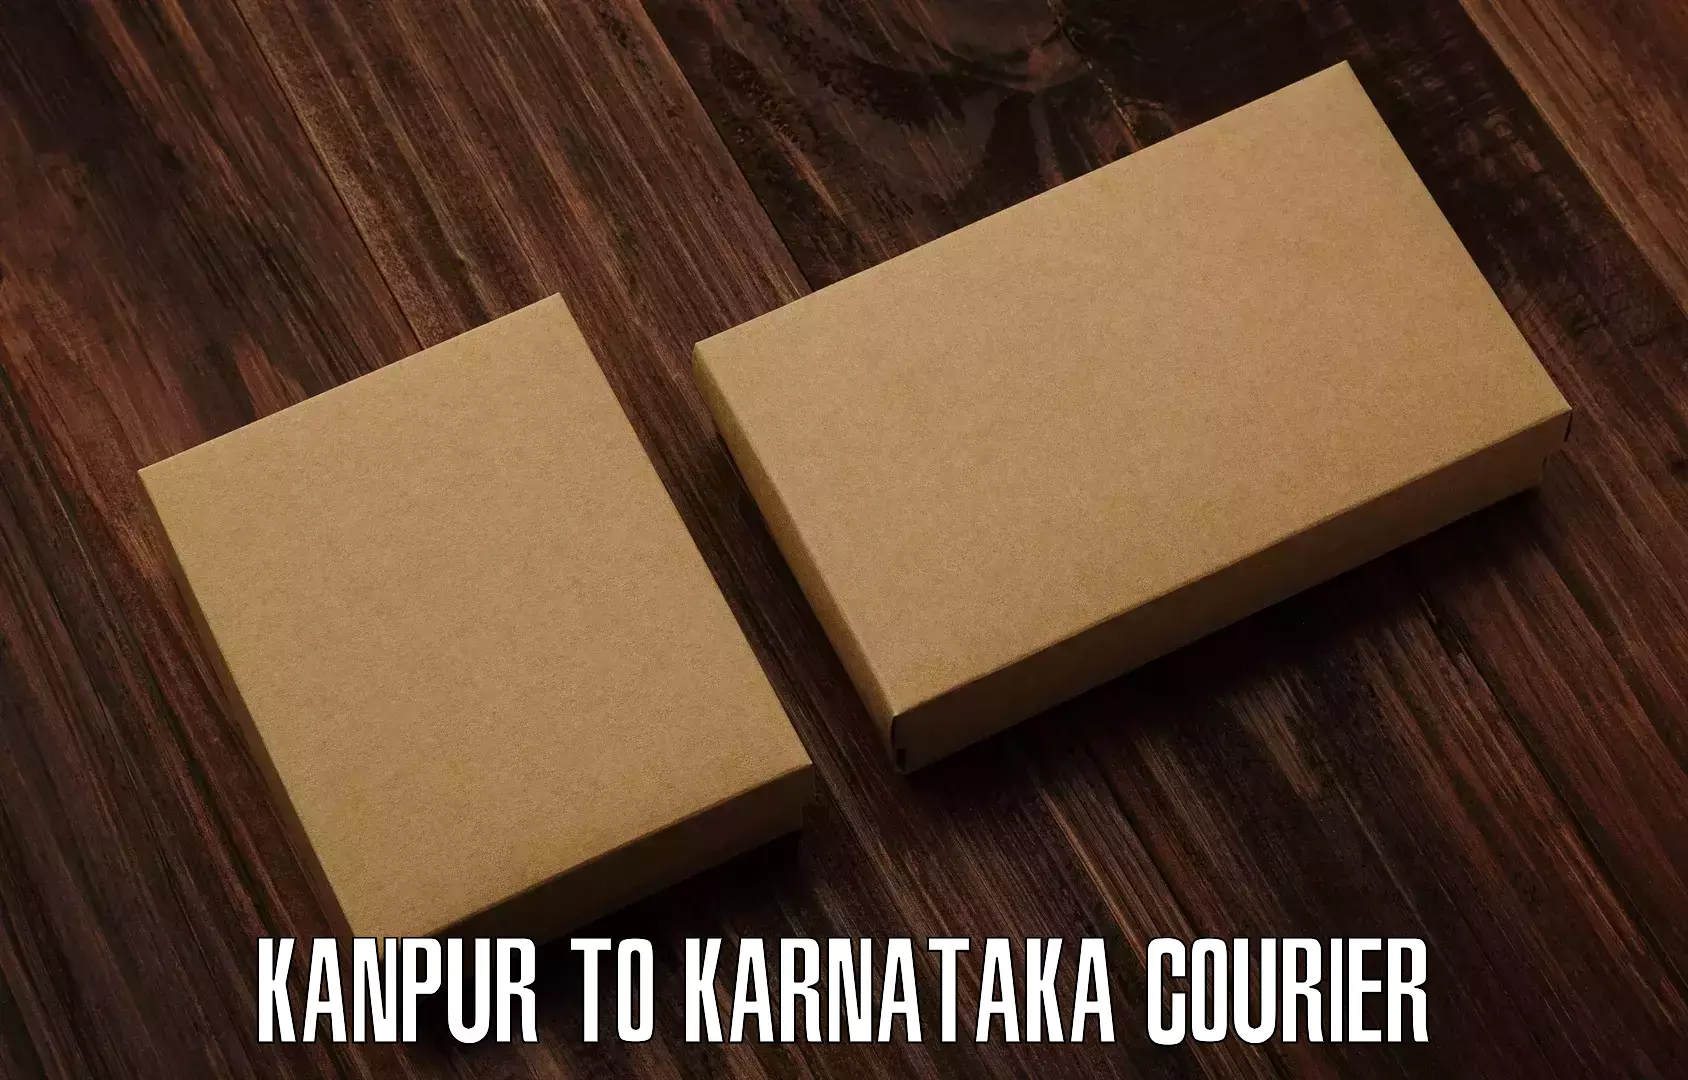 High-performance logistics Kanpur to Karnataka